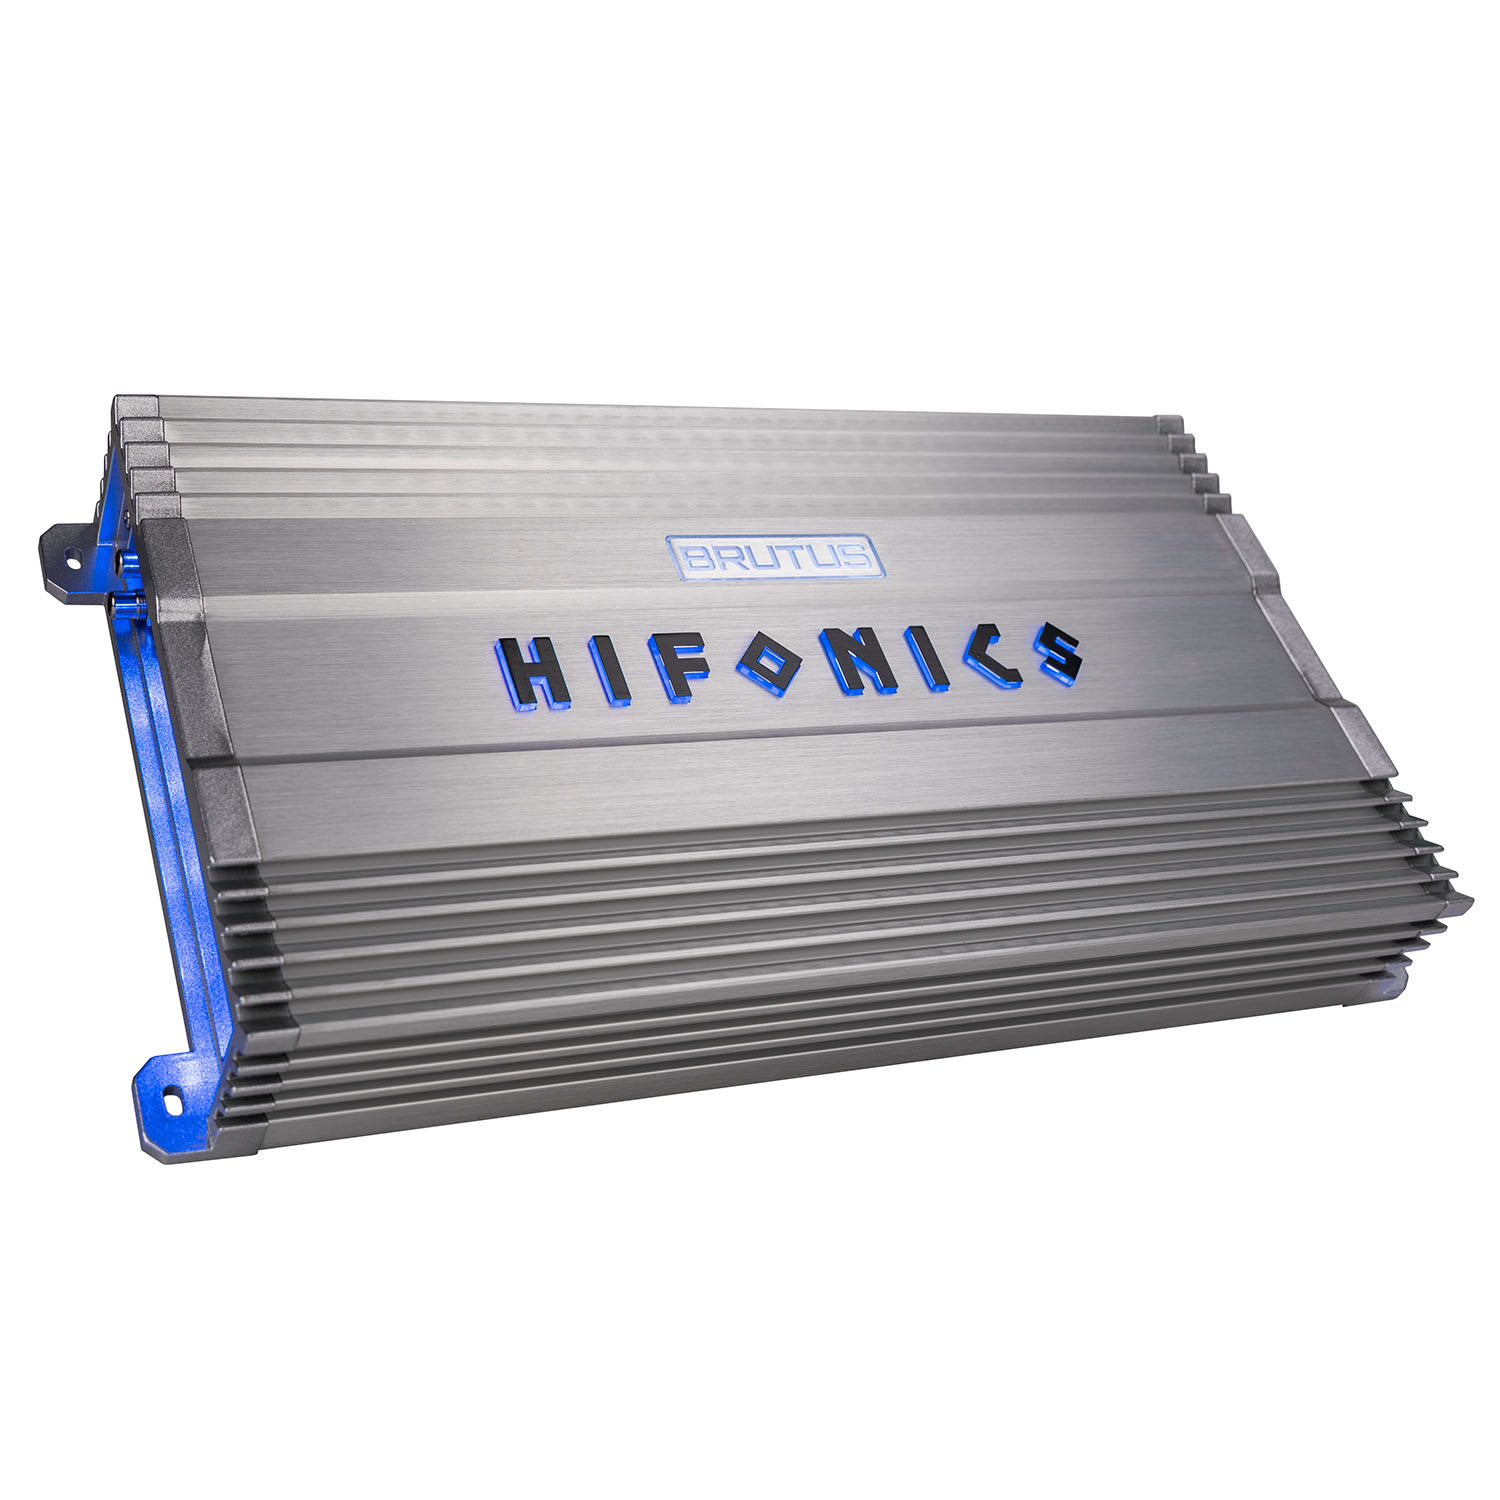 HIFONICS HFP-100 Aluminium Reflex Port Port Reflexport aus Alu mit HiFonics Logo 